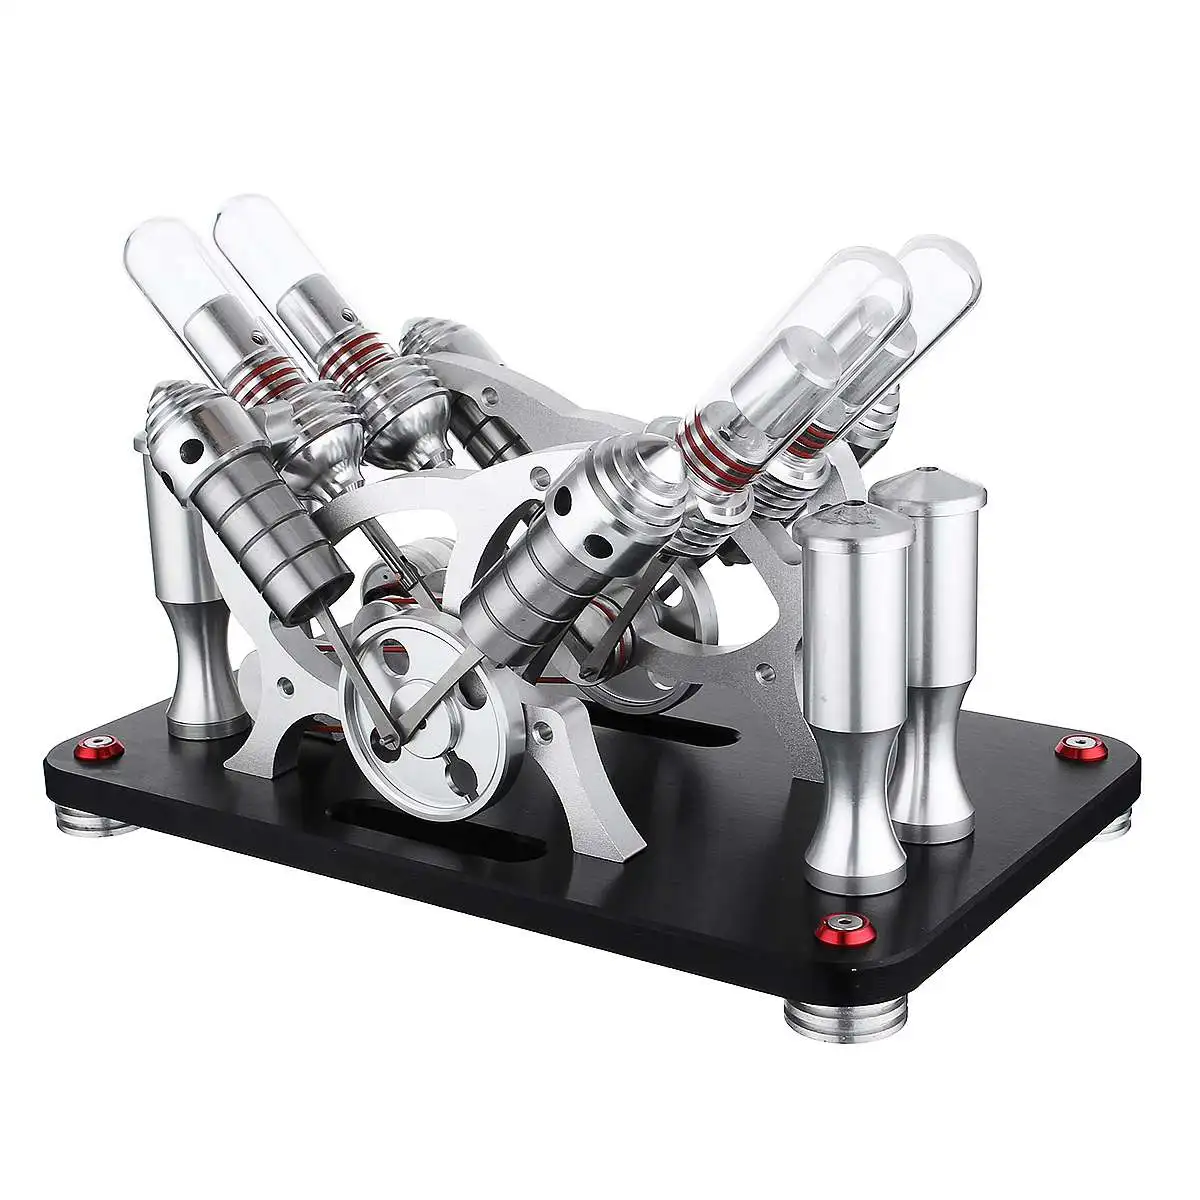 

SaiDi STEM Four-cylinder Engine External Combustion V4 Stirling Engine Model For Pediatric Science Experiments